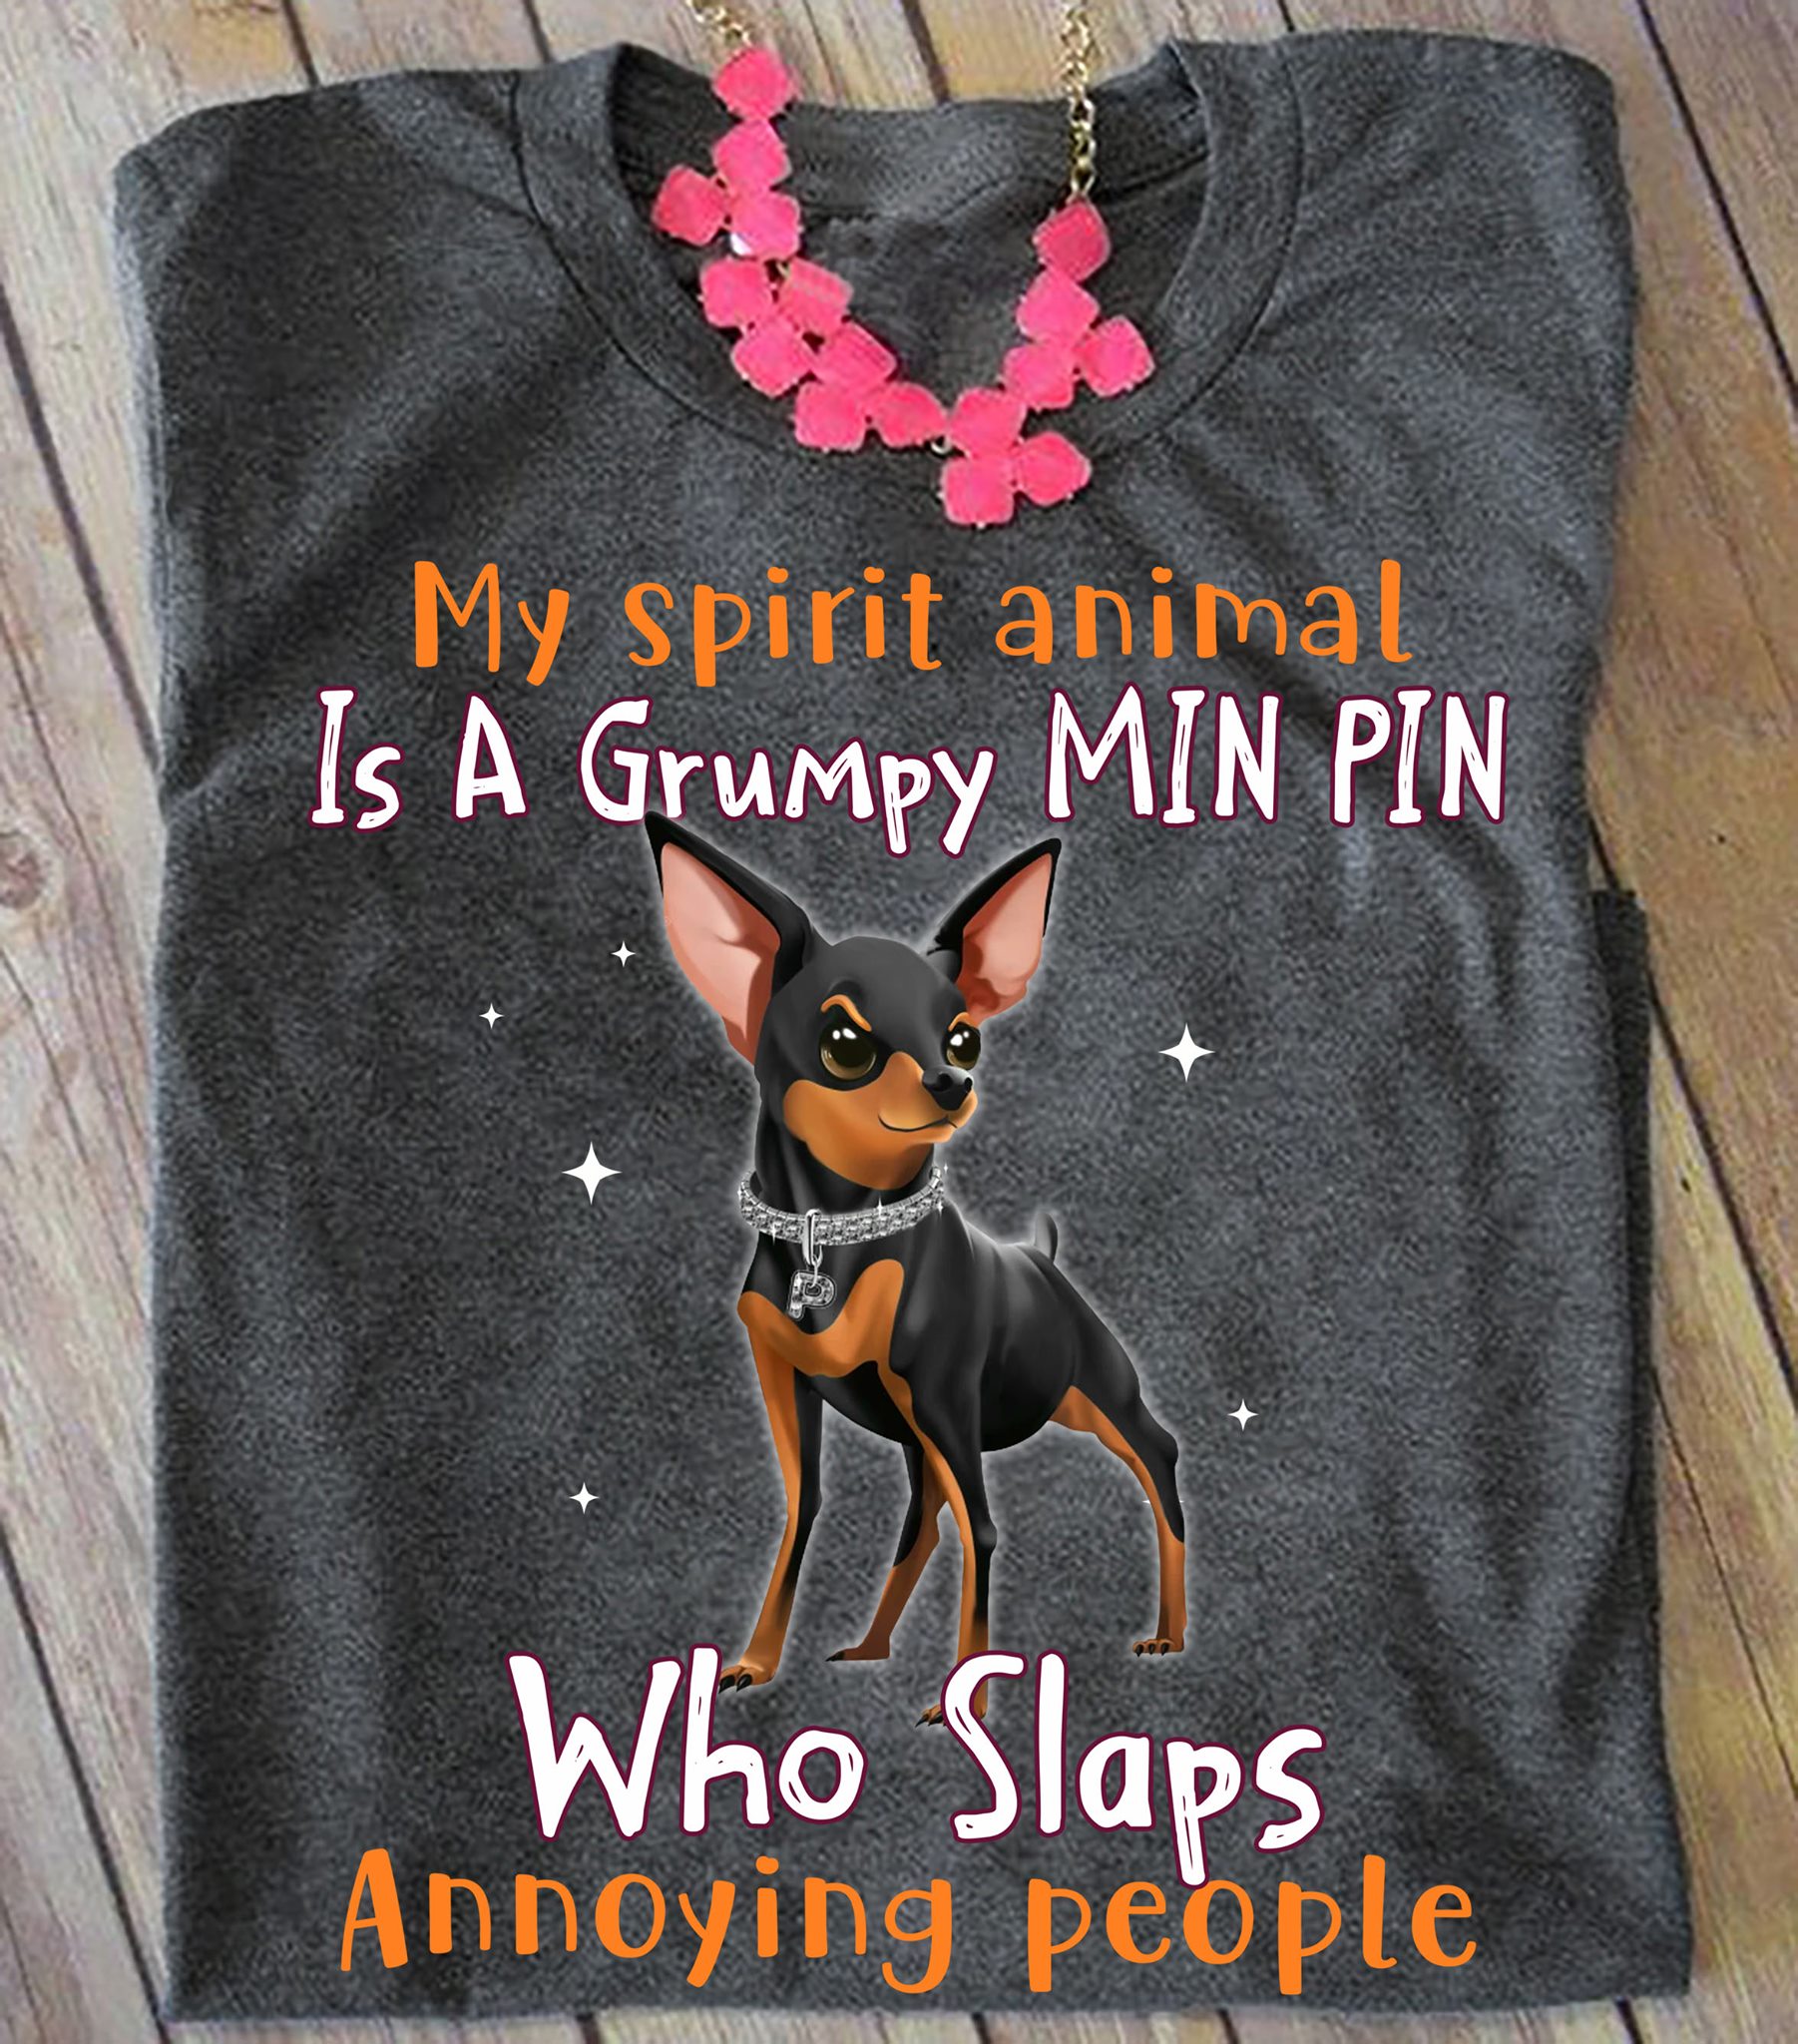 My spirit animal is a grumpy minpin who slaps annoying people